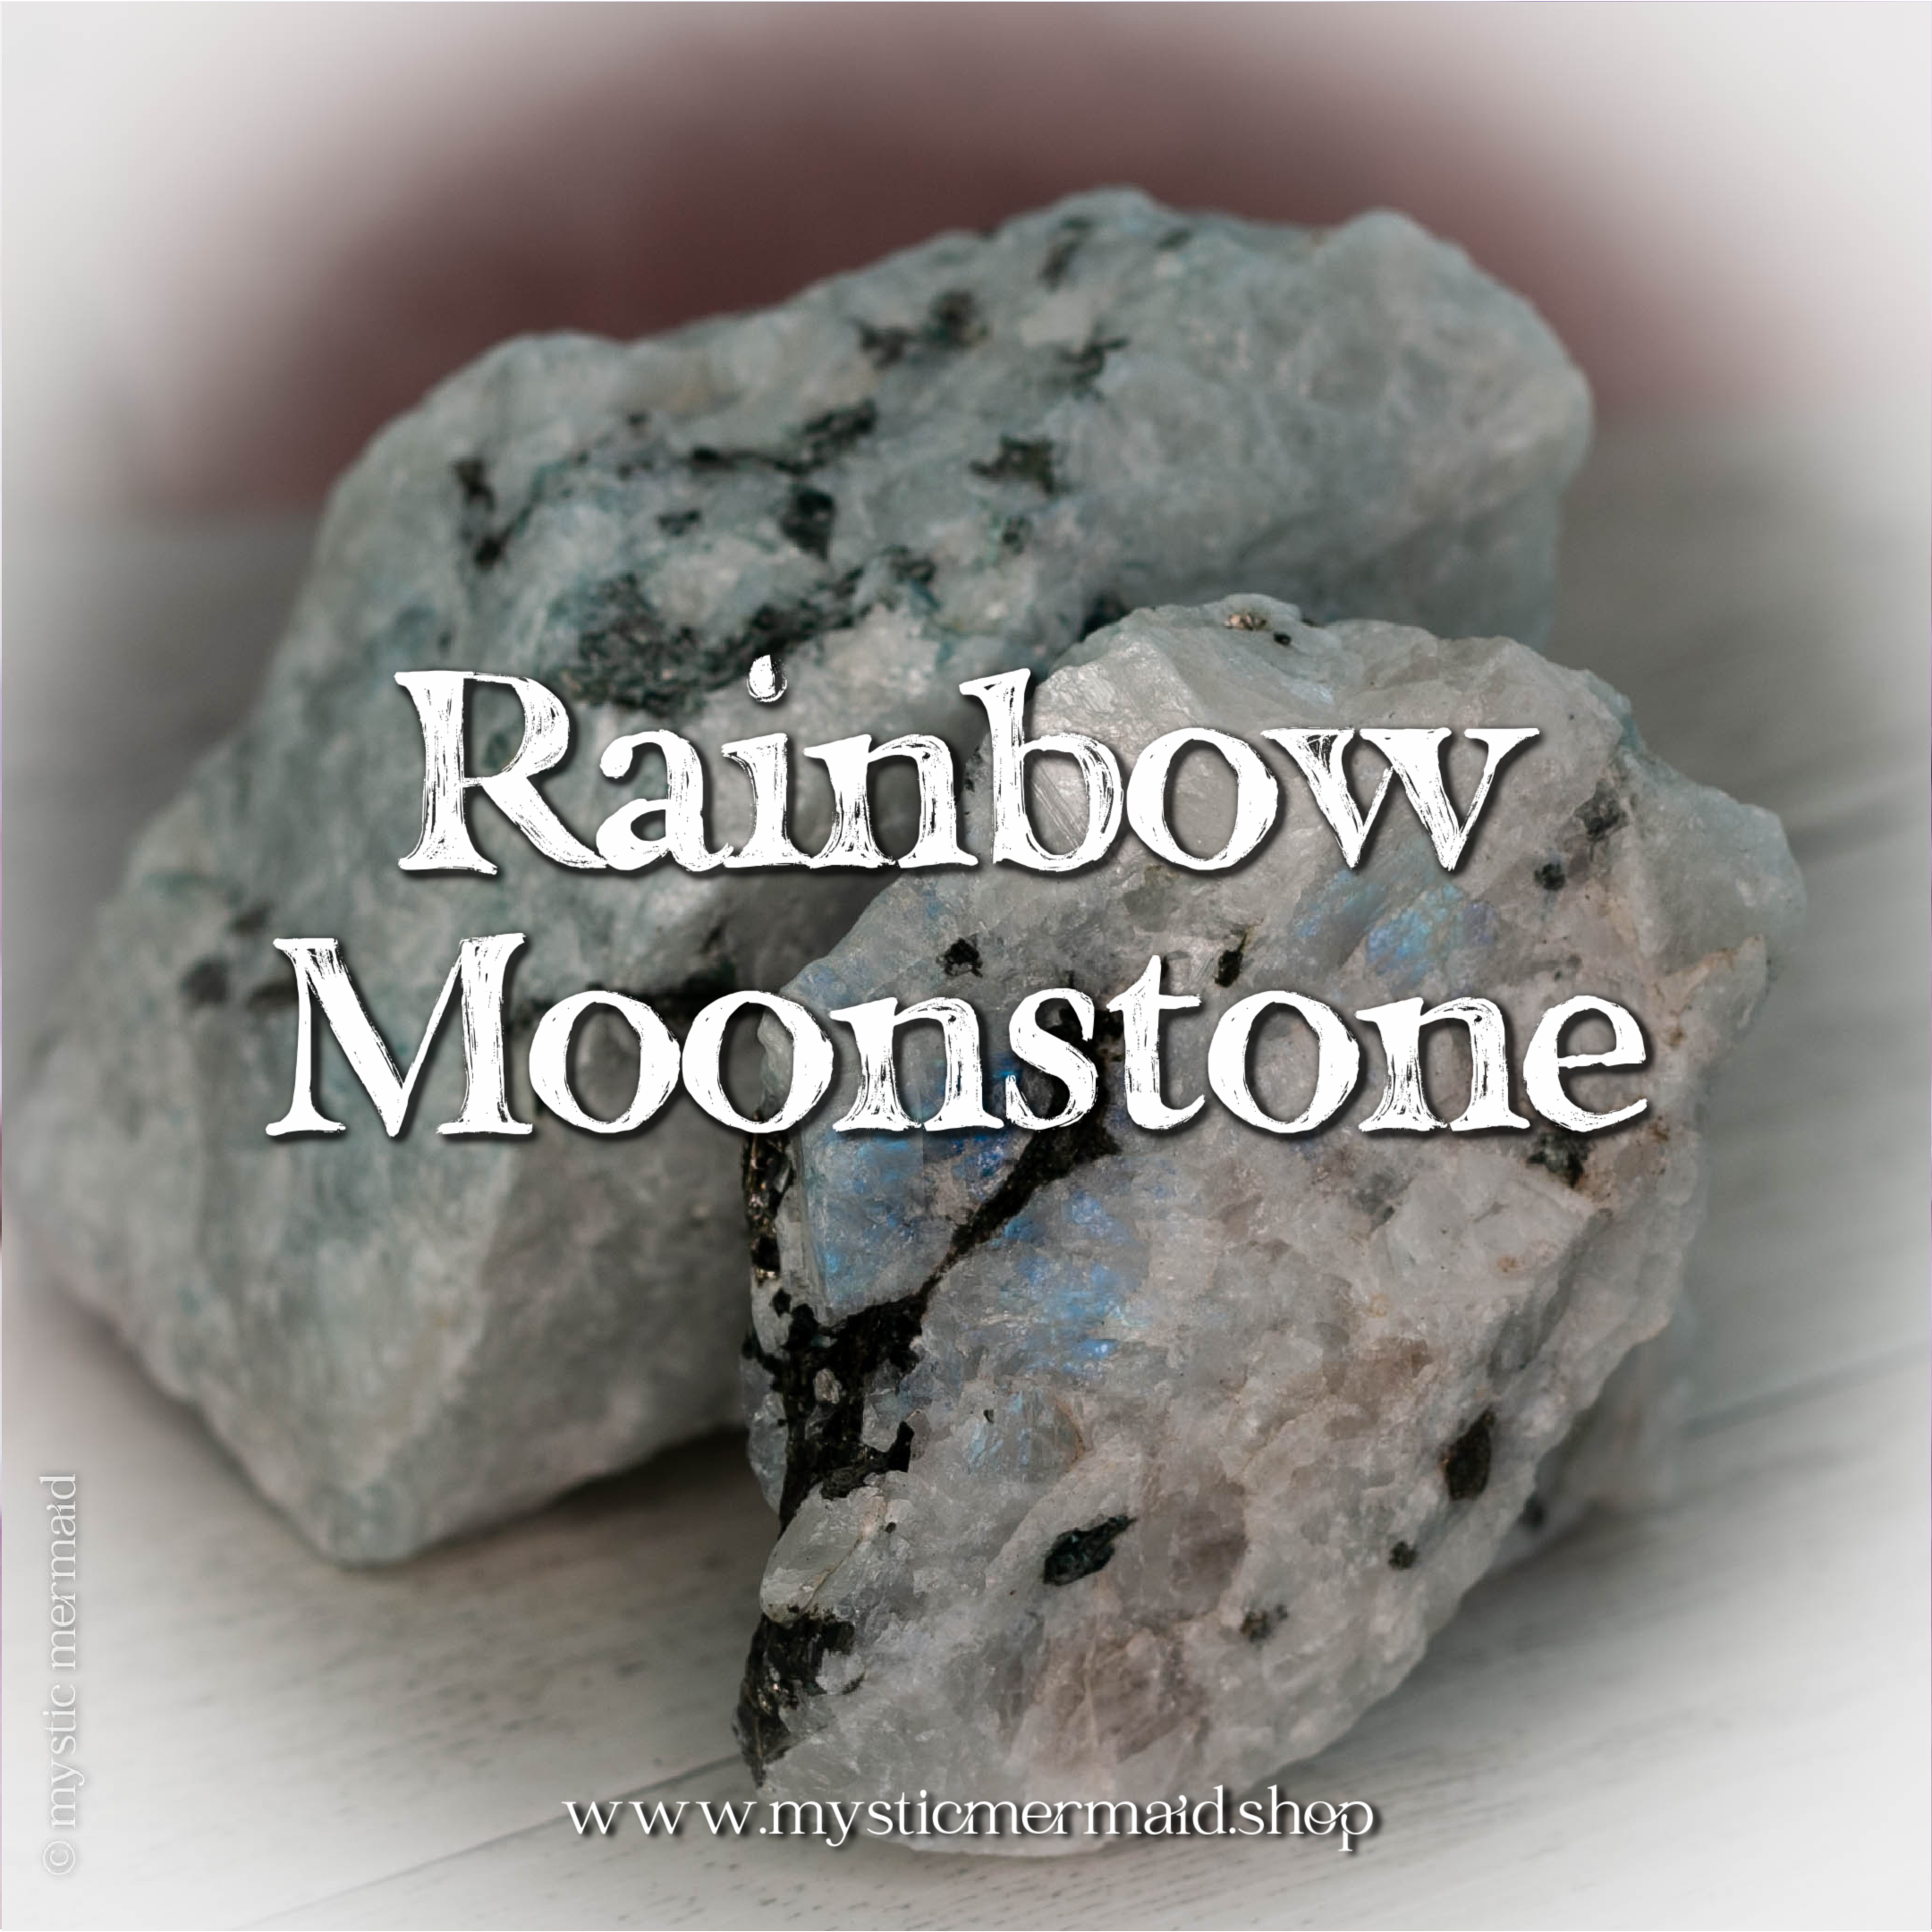 Rainbow Moonstone Metaphysical properties